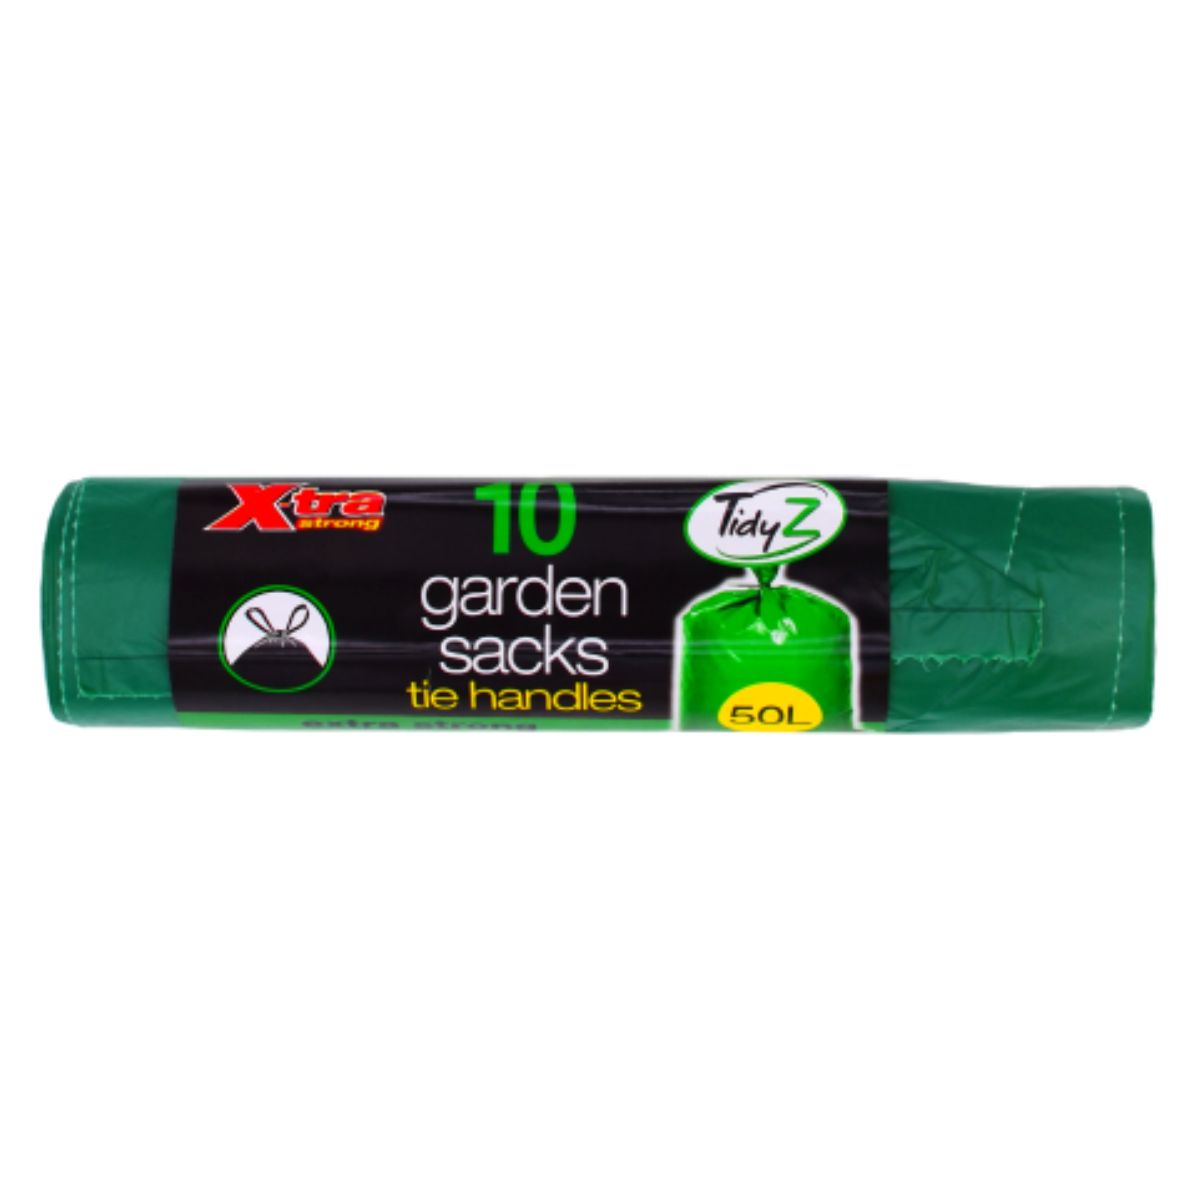 A green bag of TidyZ - Extra String Garden Sacks Tie Handles 50L - 10pcs on a white background.